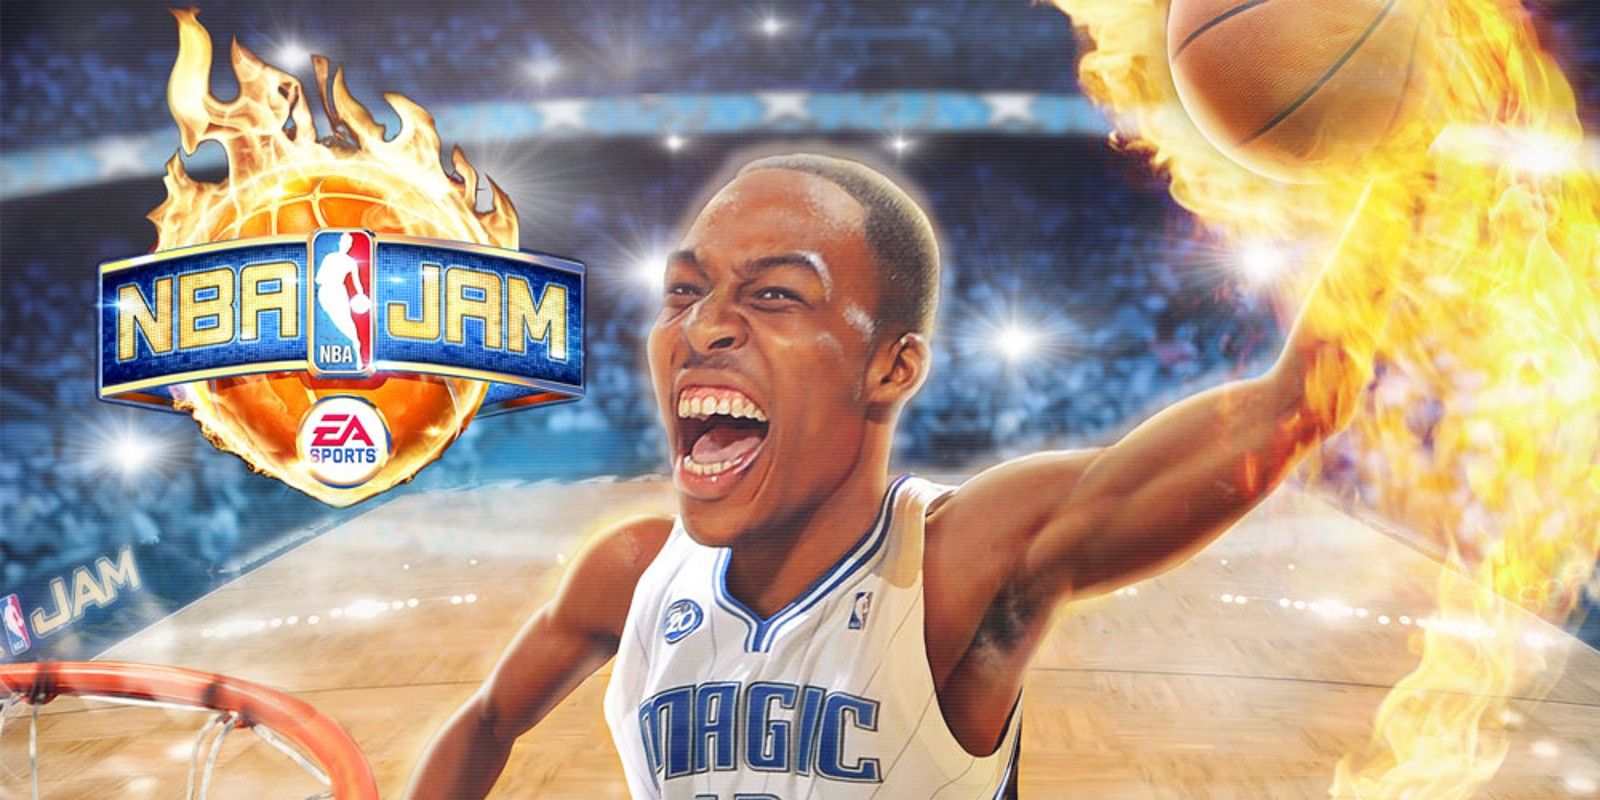 NBA Jam Wii, a player dunks a flaming basketball next to the NBA Jam logo